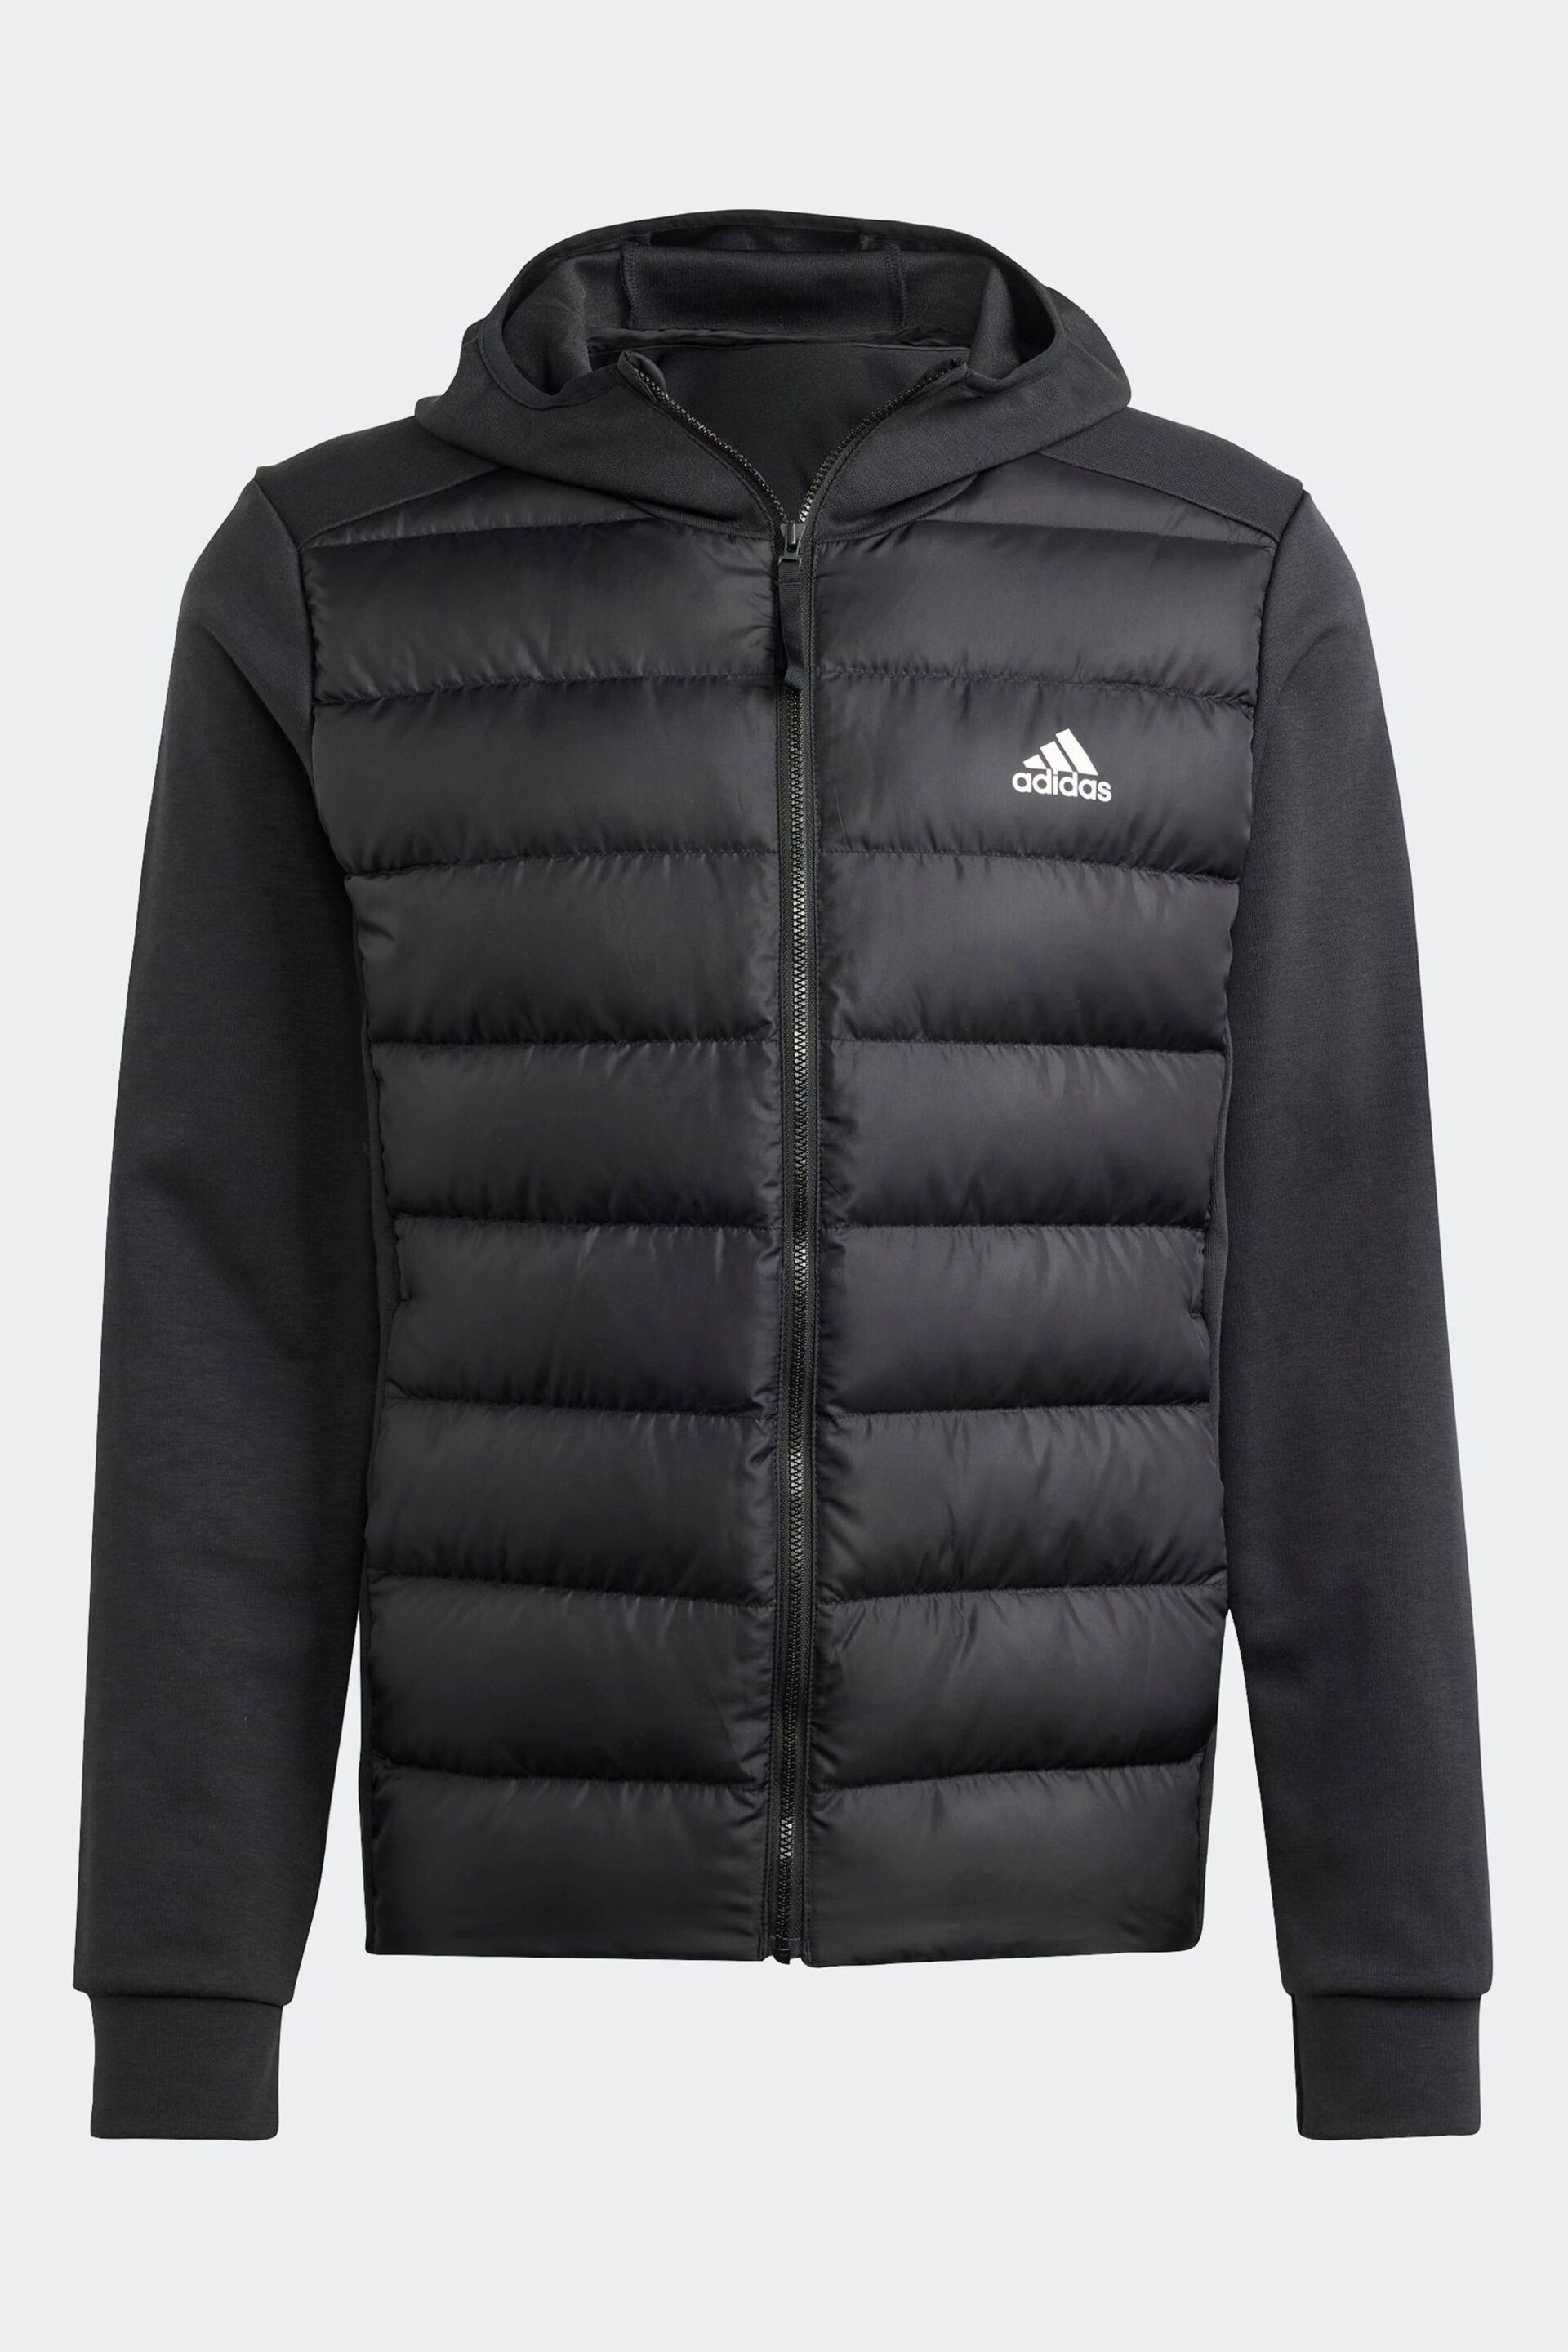 adidas Black Terrex Essentials Hybrid Down Hooded Jacket - Image 7 of 7